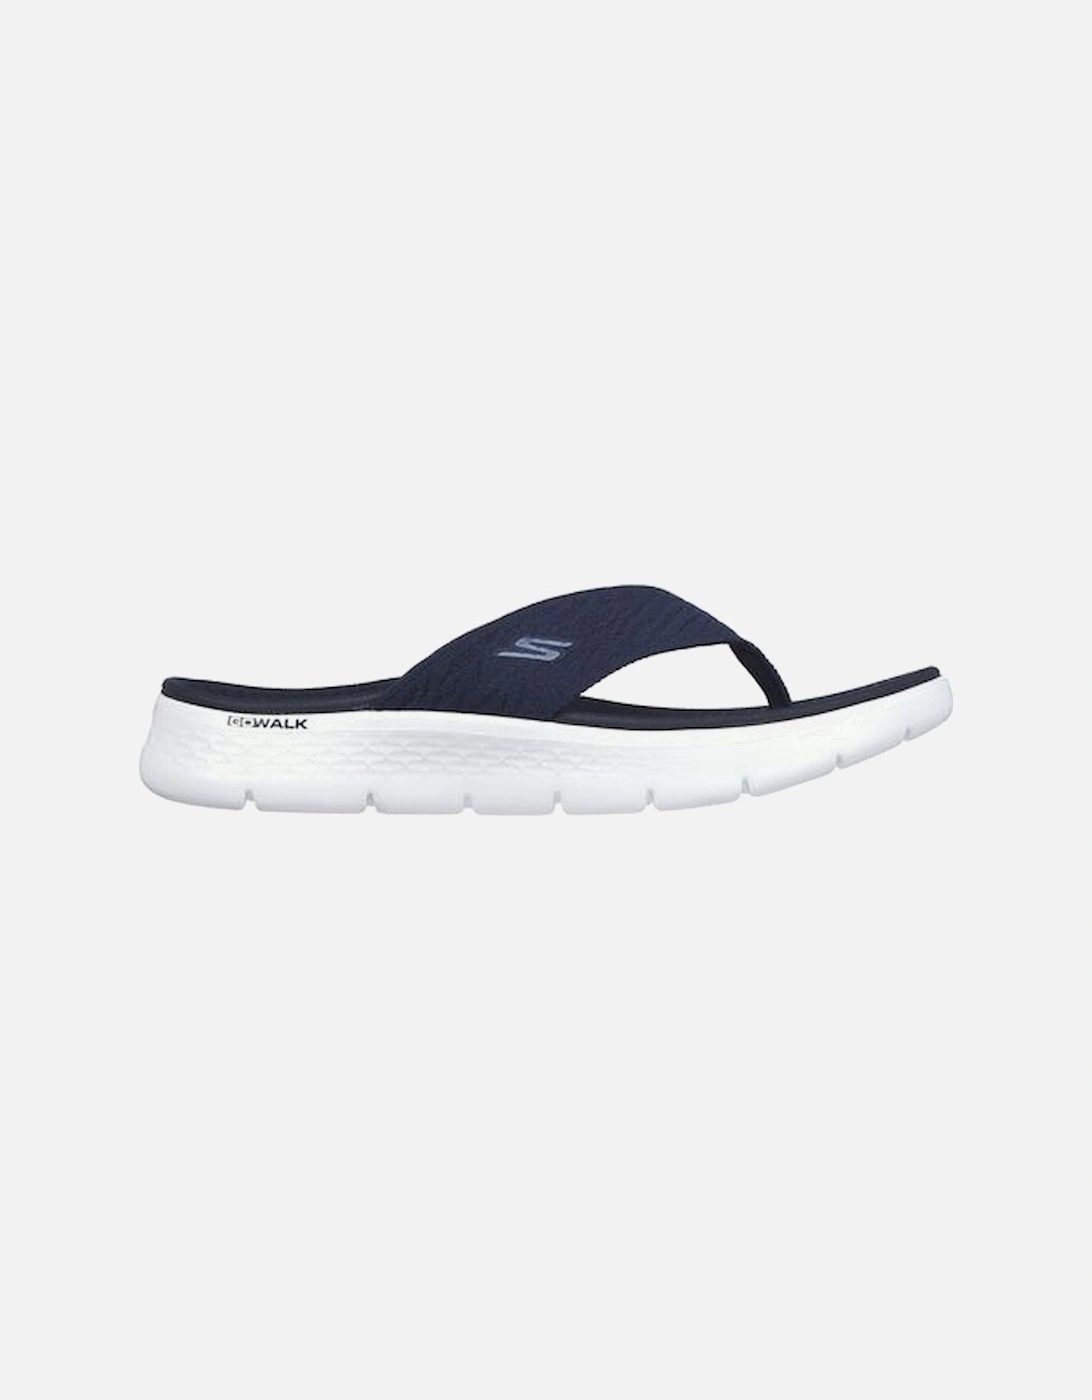 Skechers 141404 Go Walk Flex sandal in Navy, 2 of 1